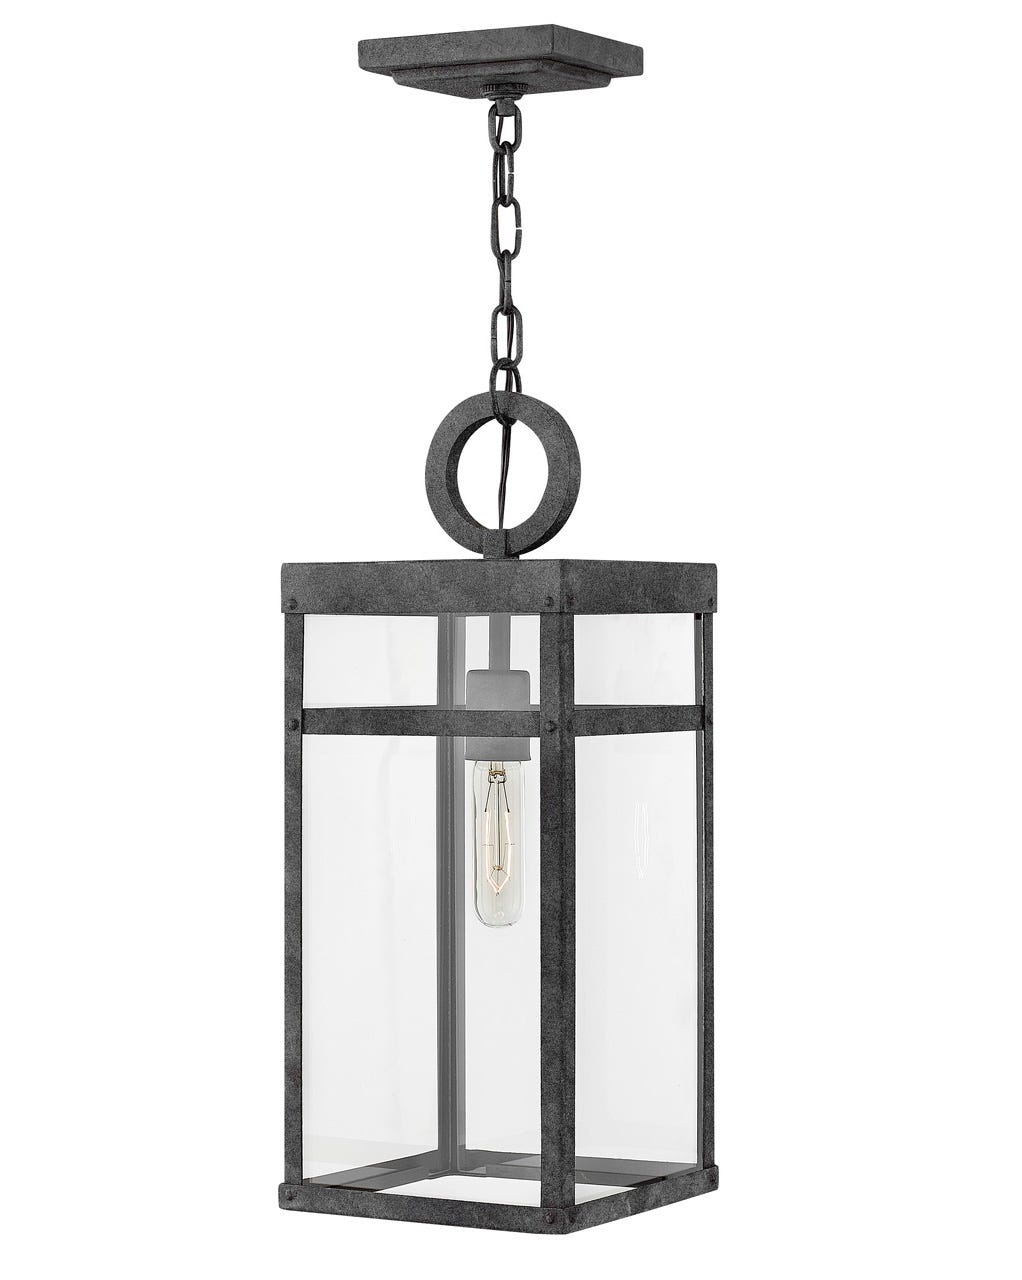 OUTDOOR PORTER Hanging Lantern Outdoor Light Fixture l Hanging Hinkley Aged Zinc 7.5x7.5x19.0 